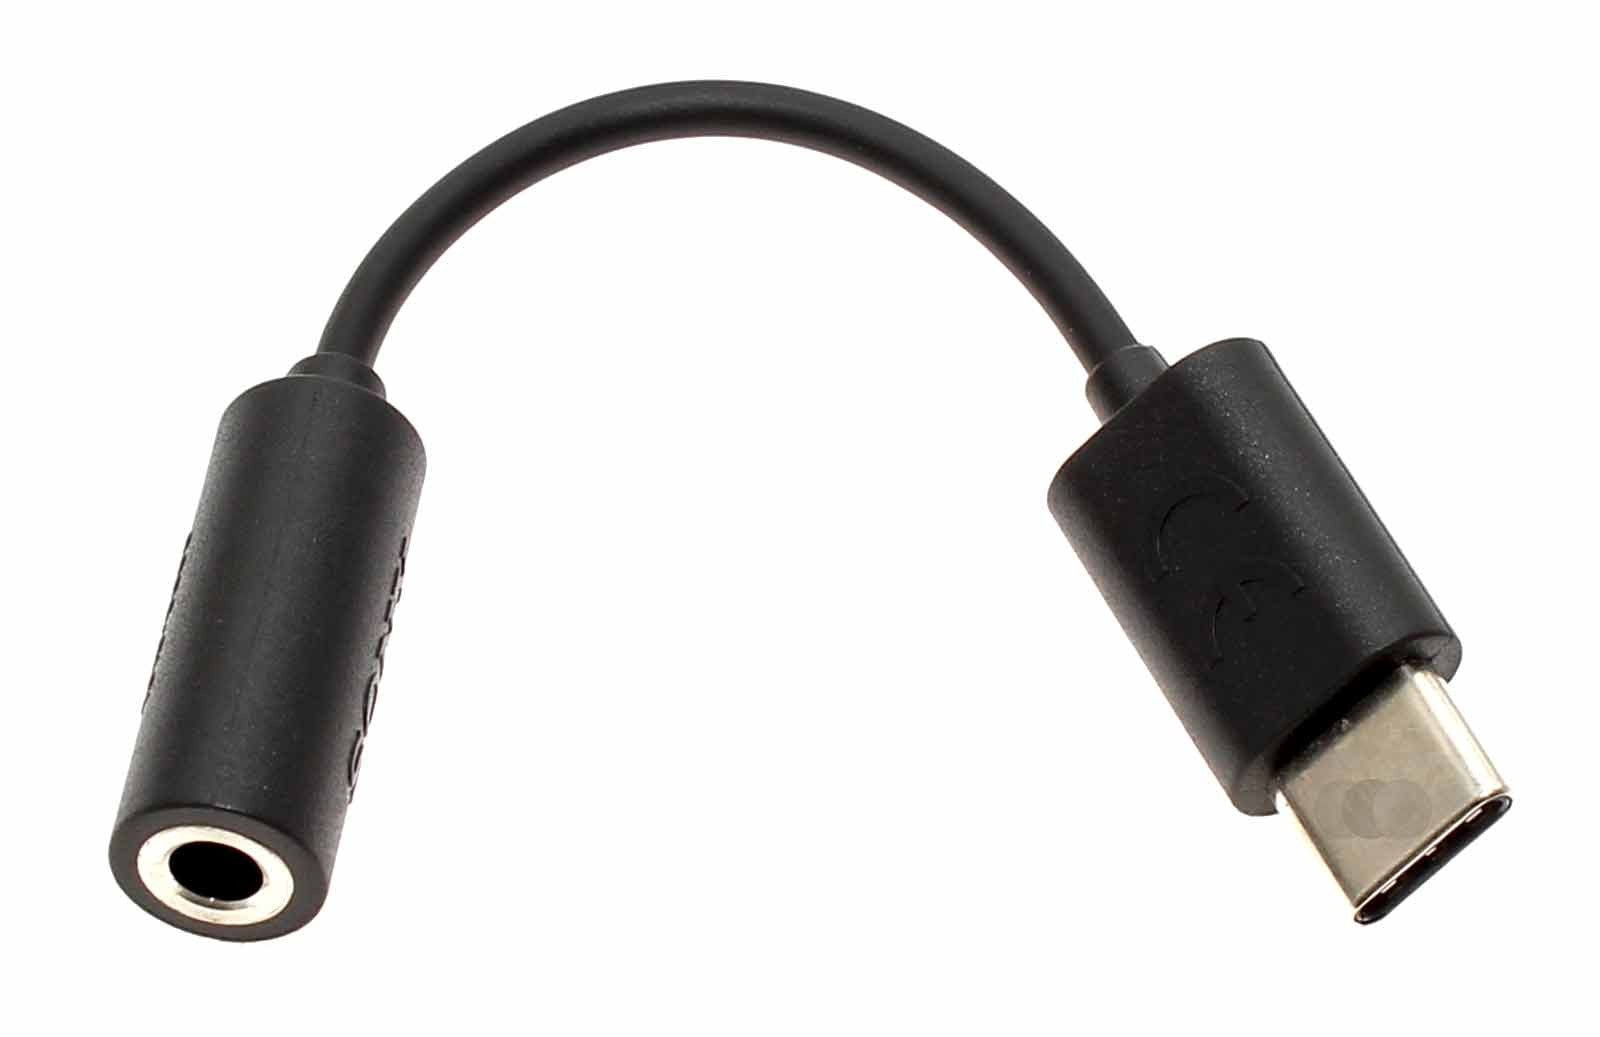 Sony til Jack stik adapter - Audio USB conversion cable ITFON